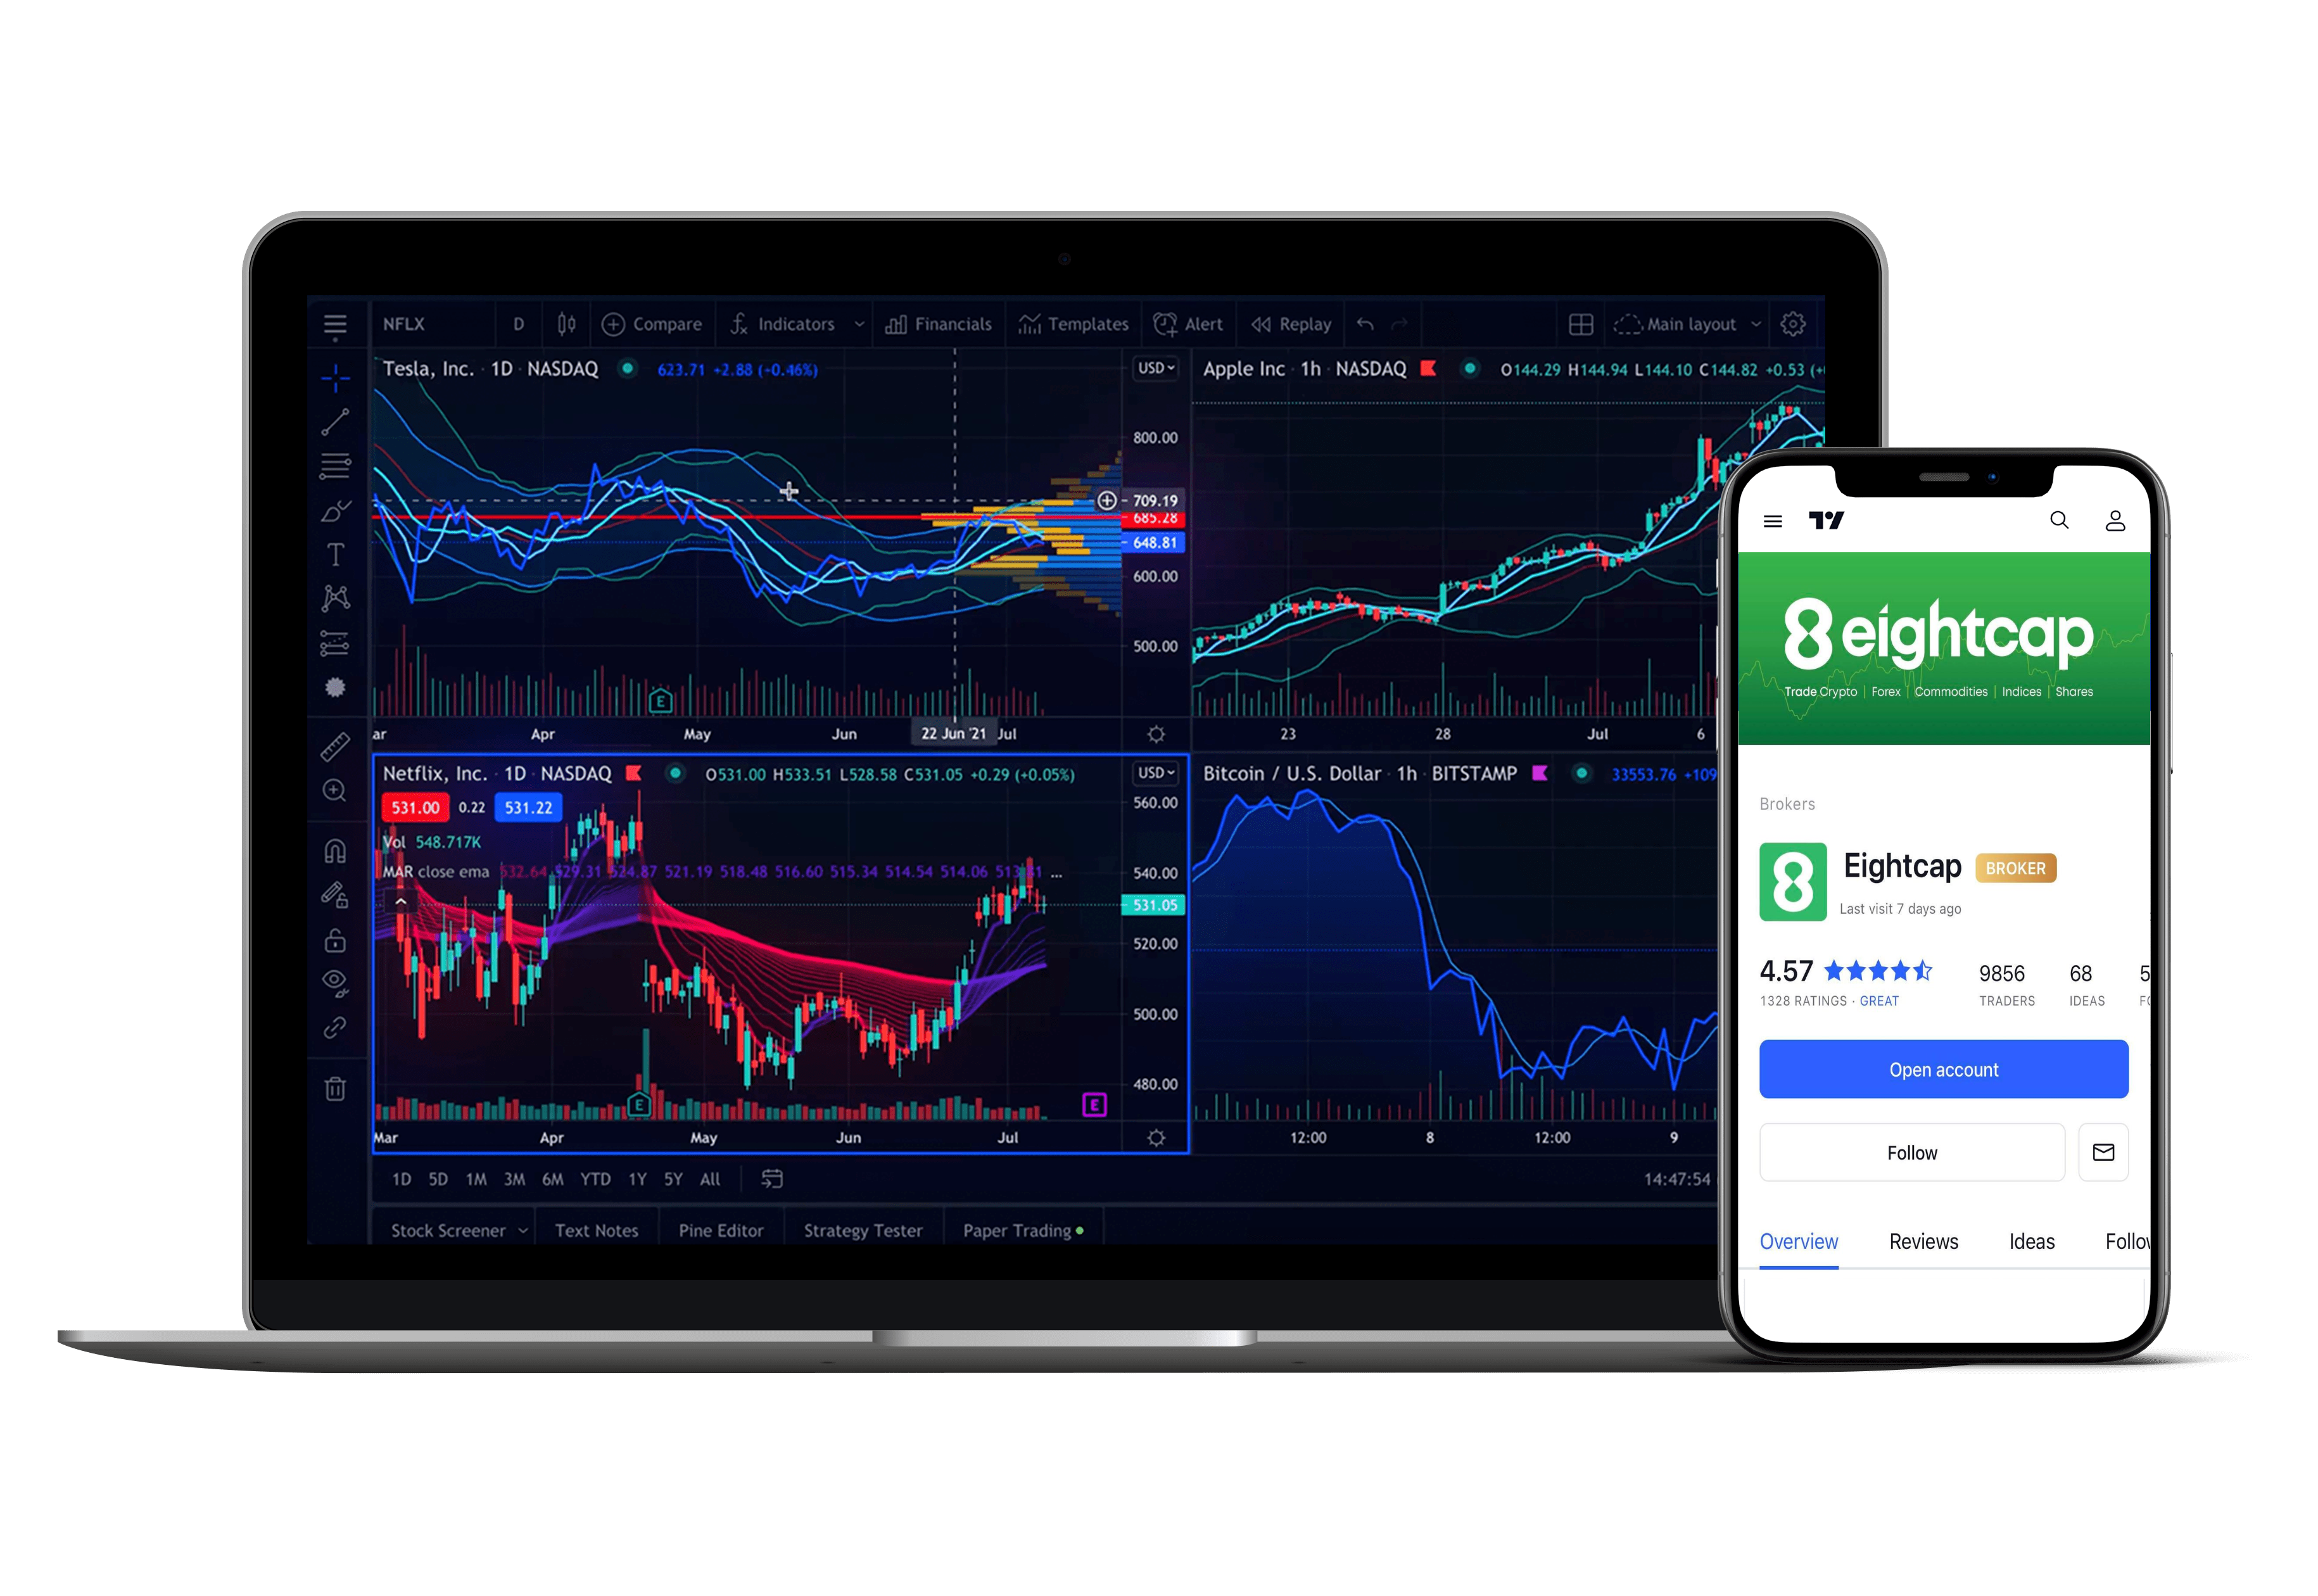 TradingView Stock trading platform